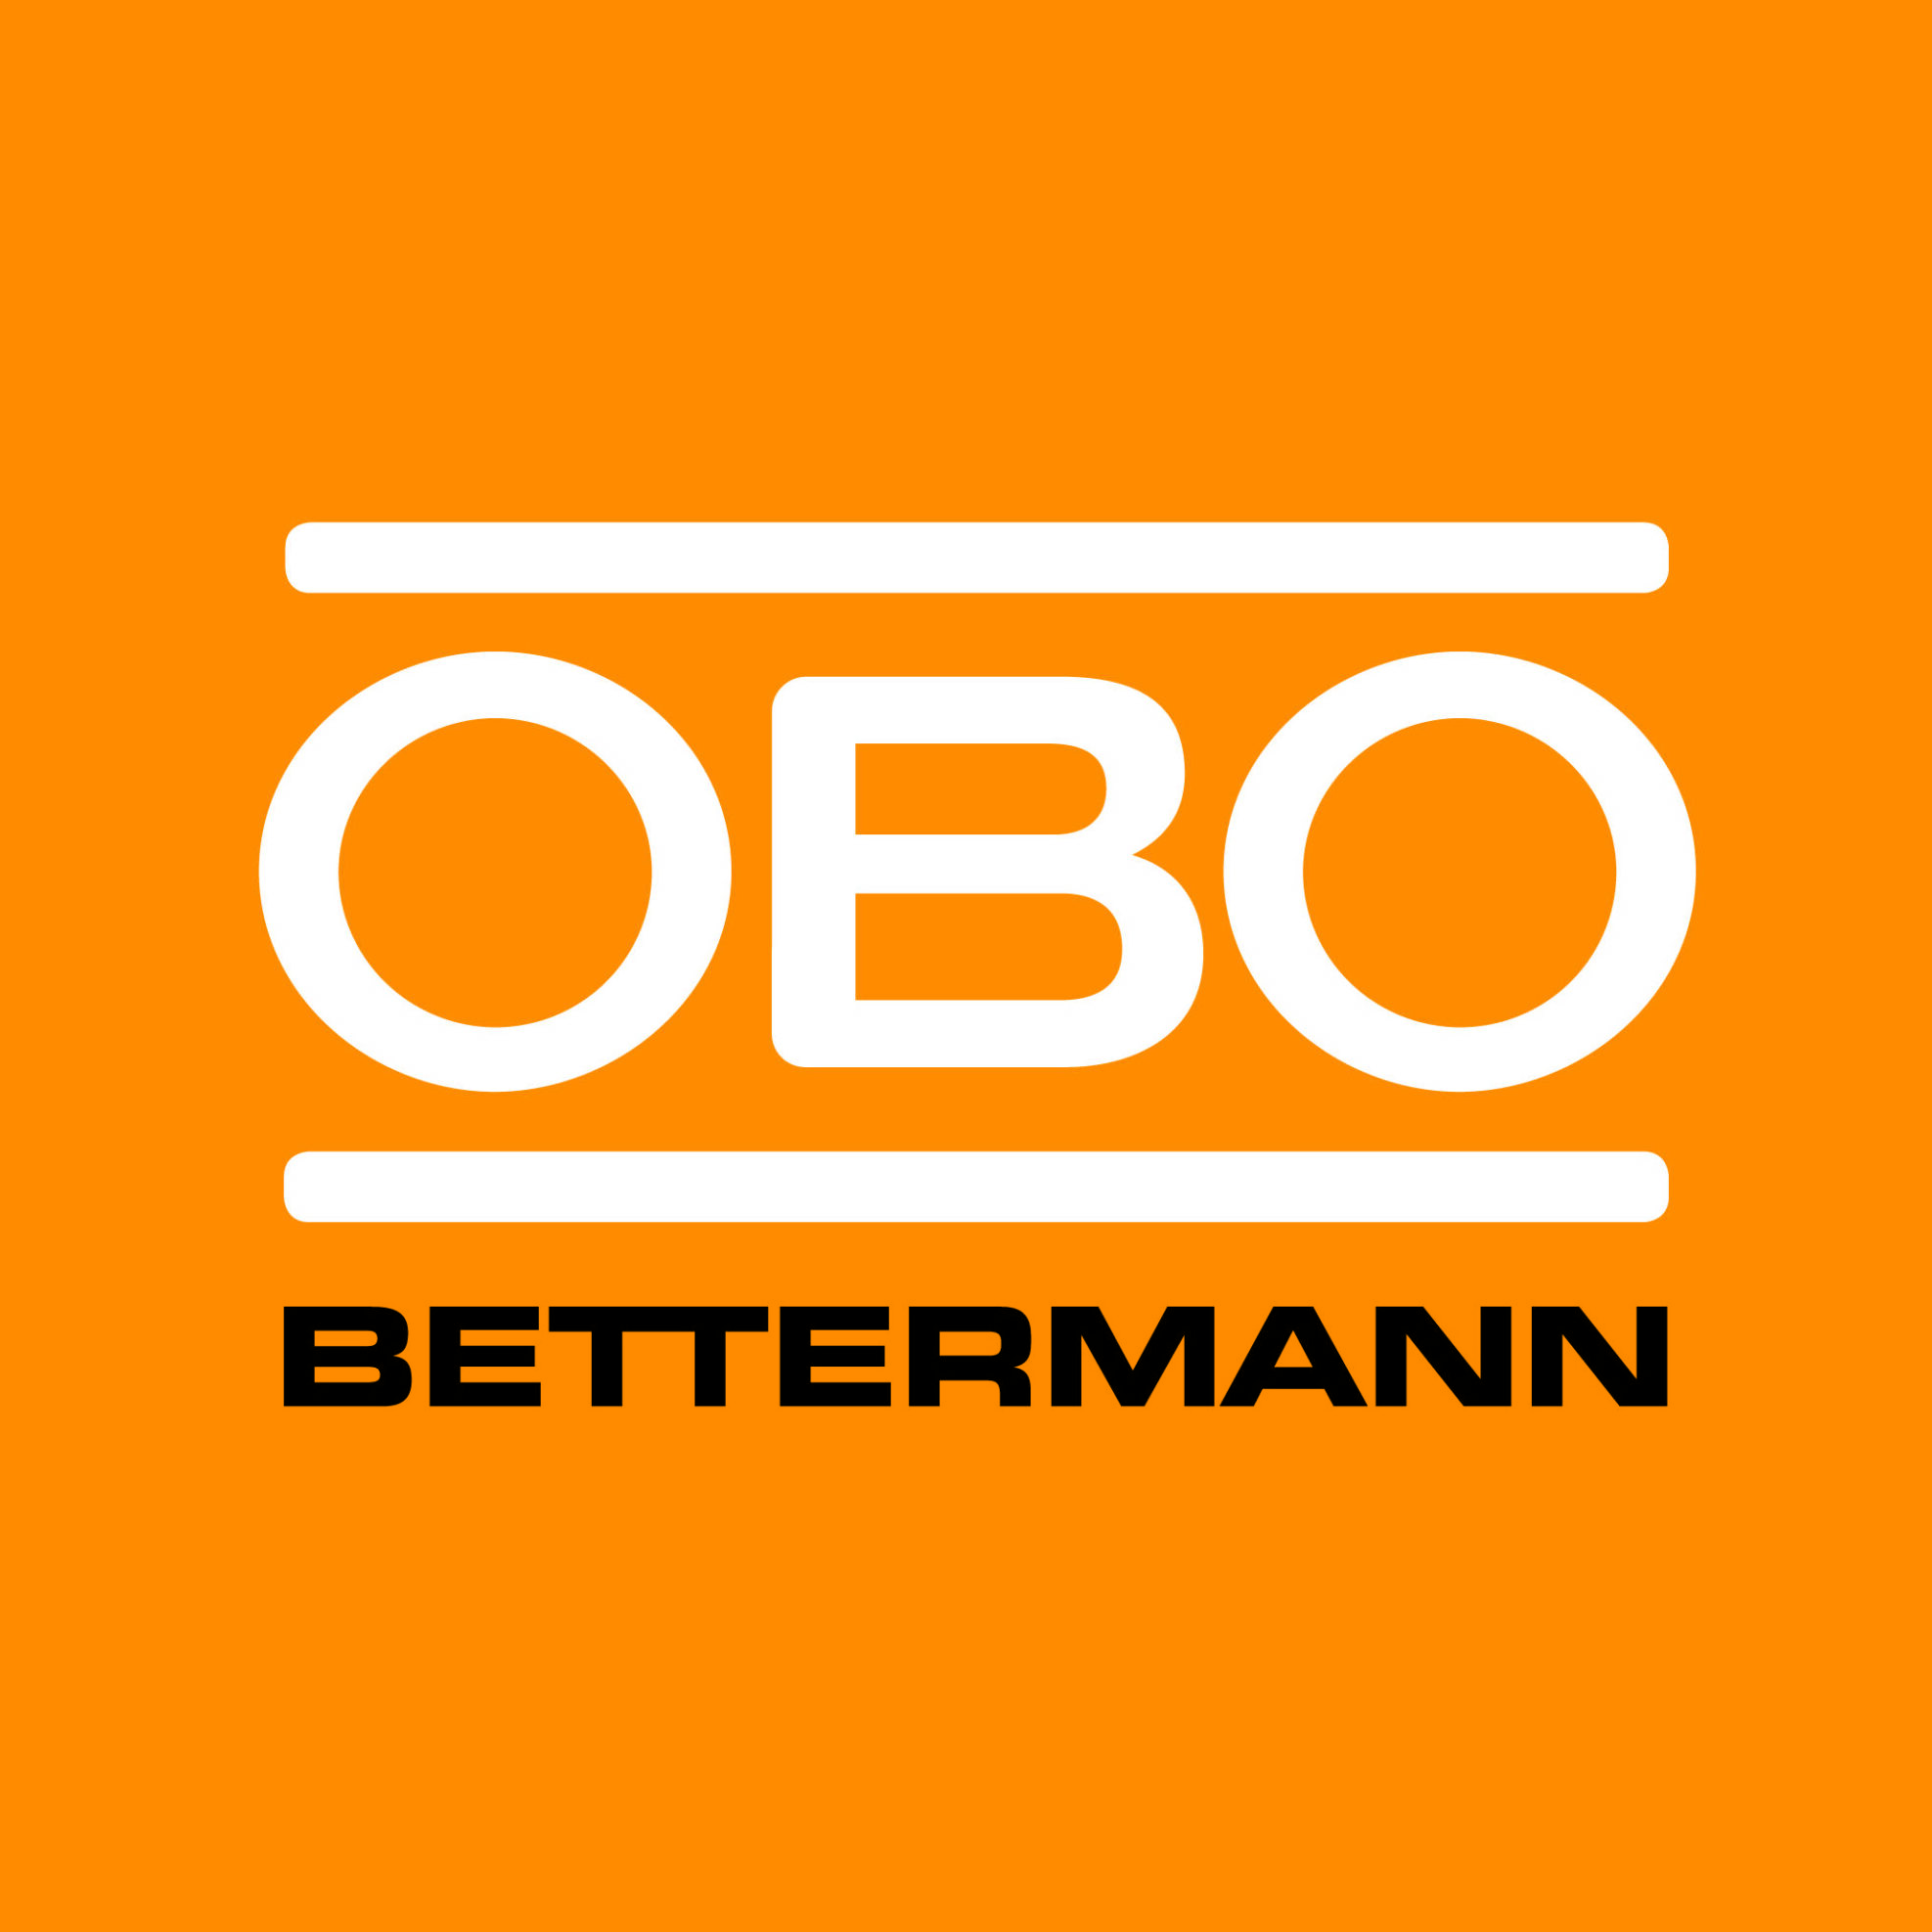 Obo Betterman